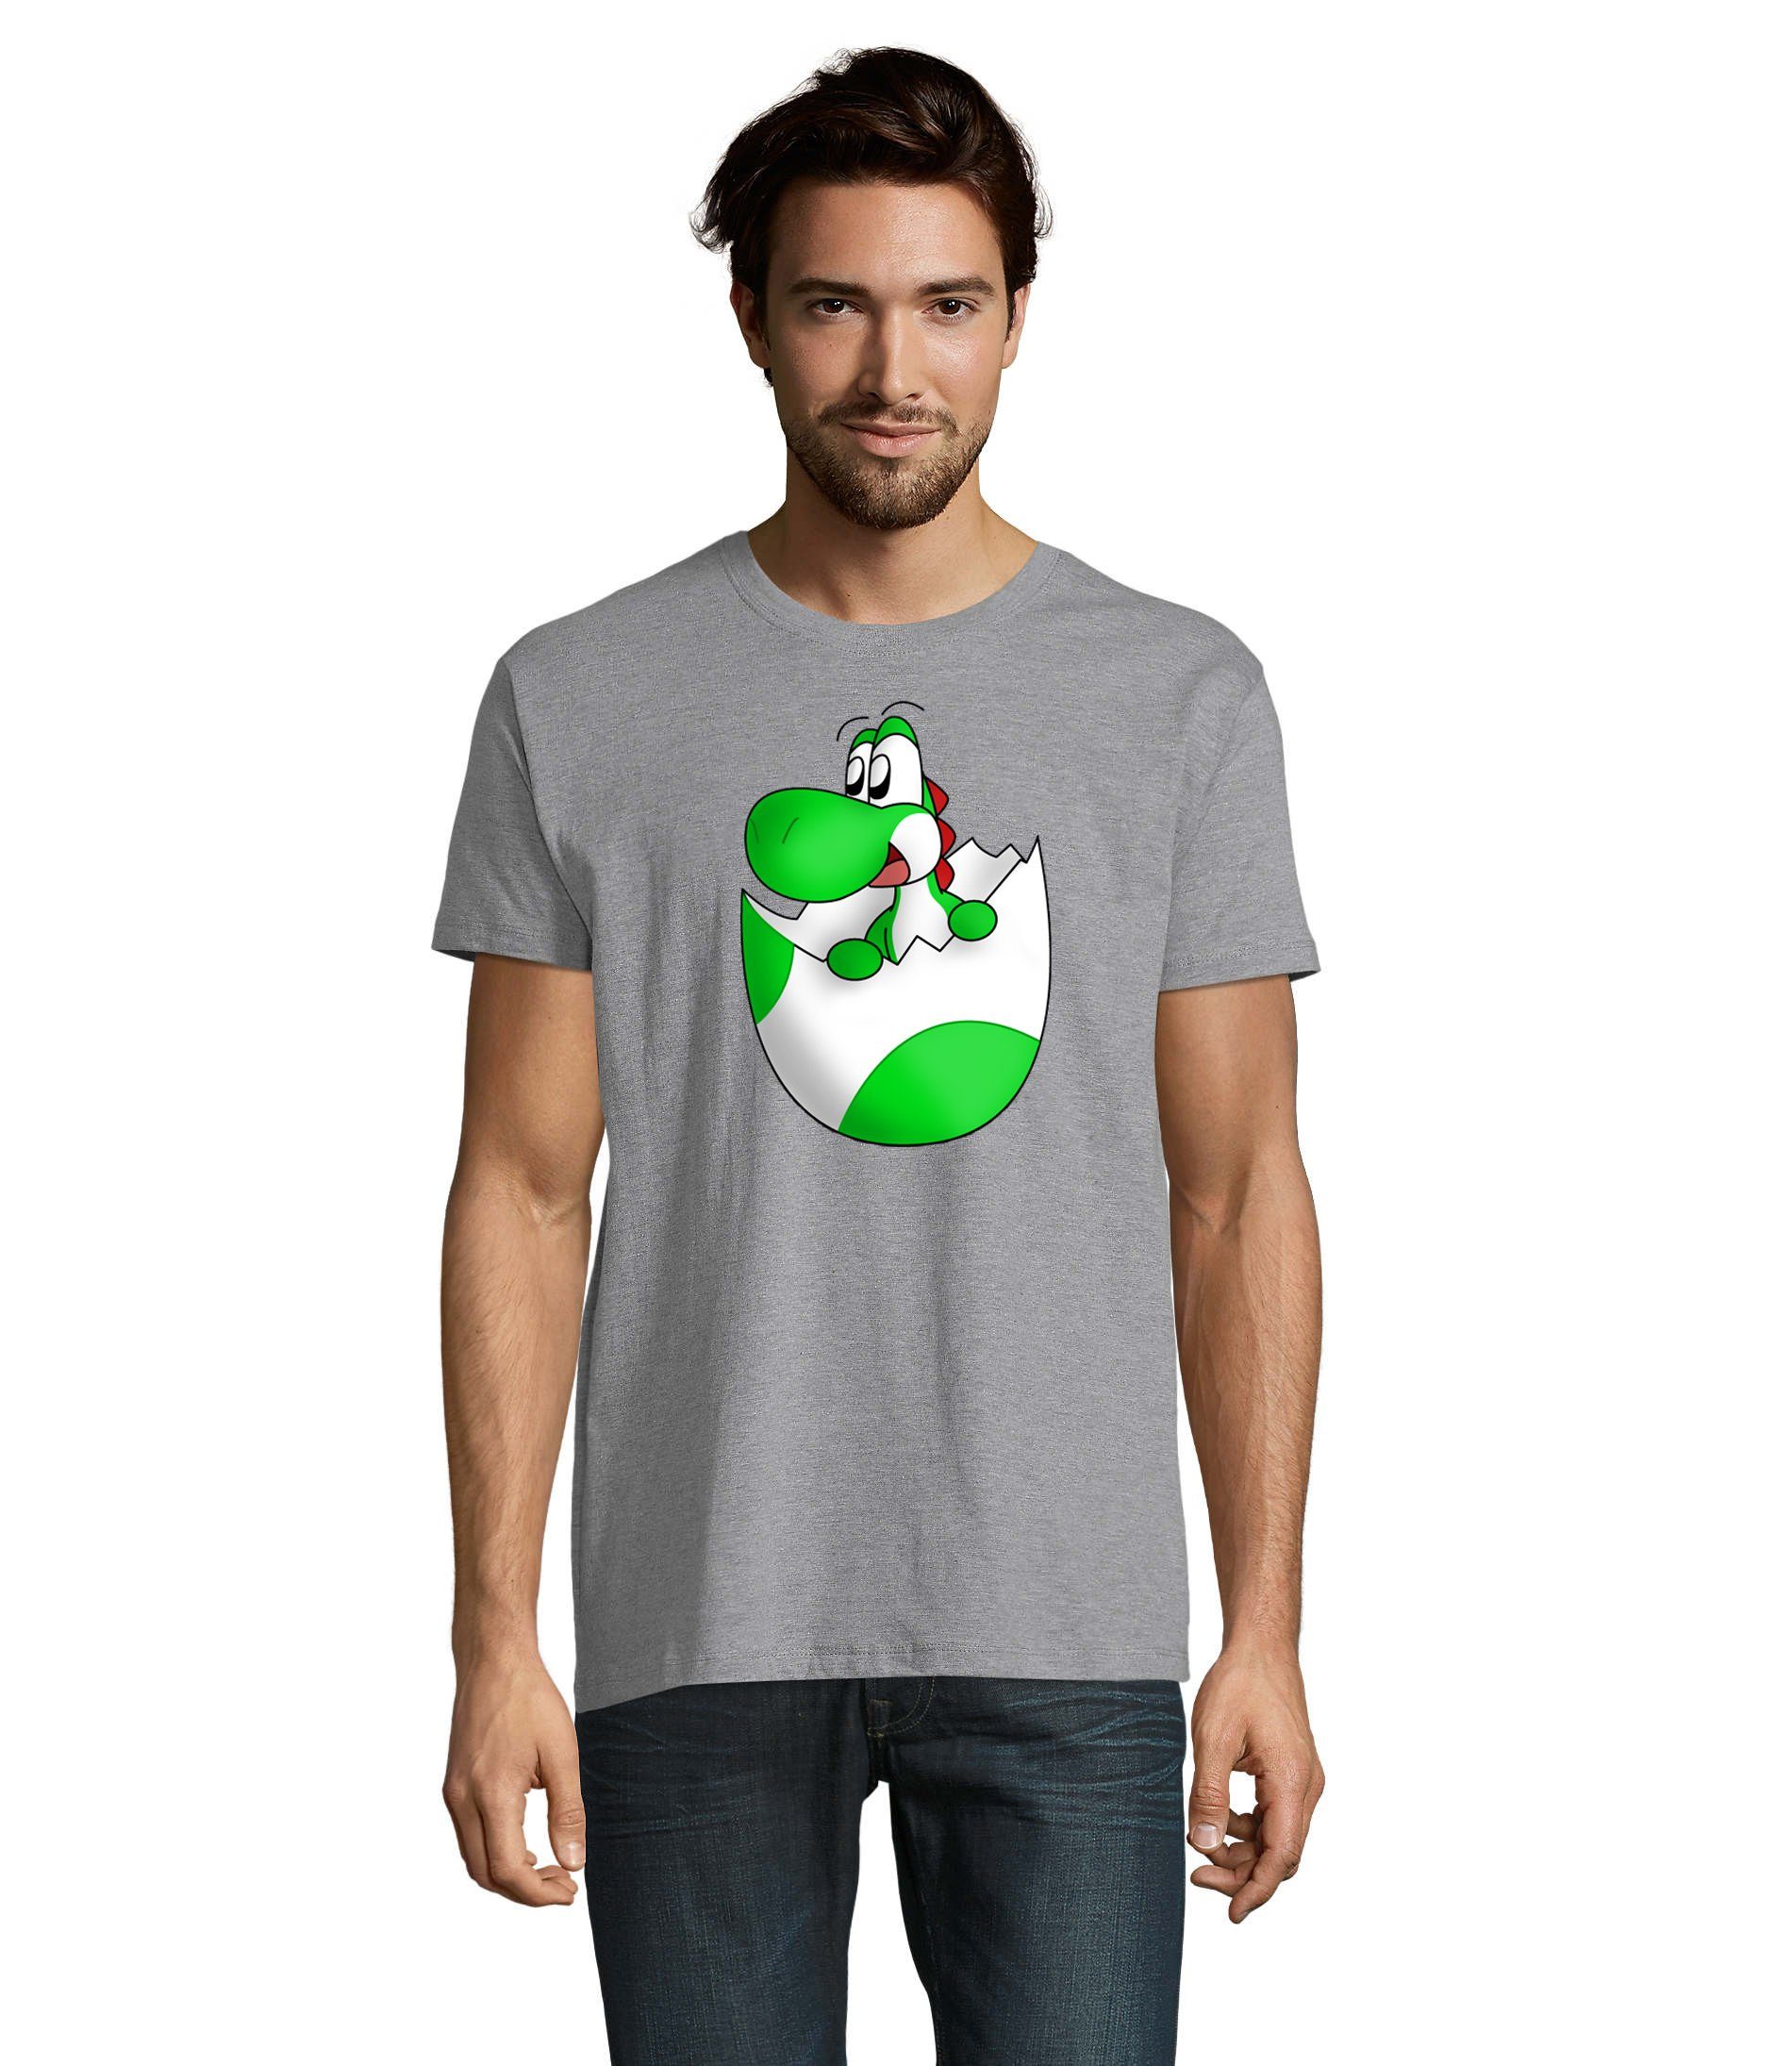 Blondie & Brownie T-Shirt Herren Baby Yoshi Ei Mario Konsole Gaming Spiel Nintendo Grau